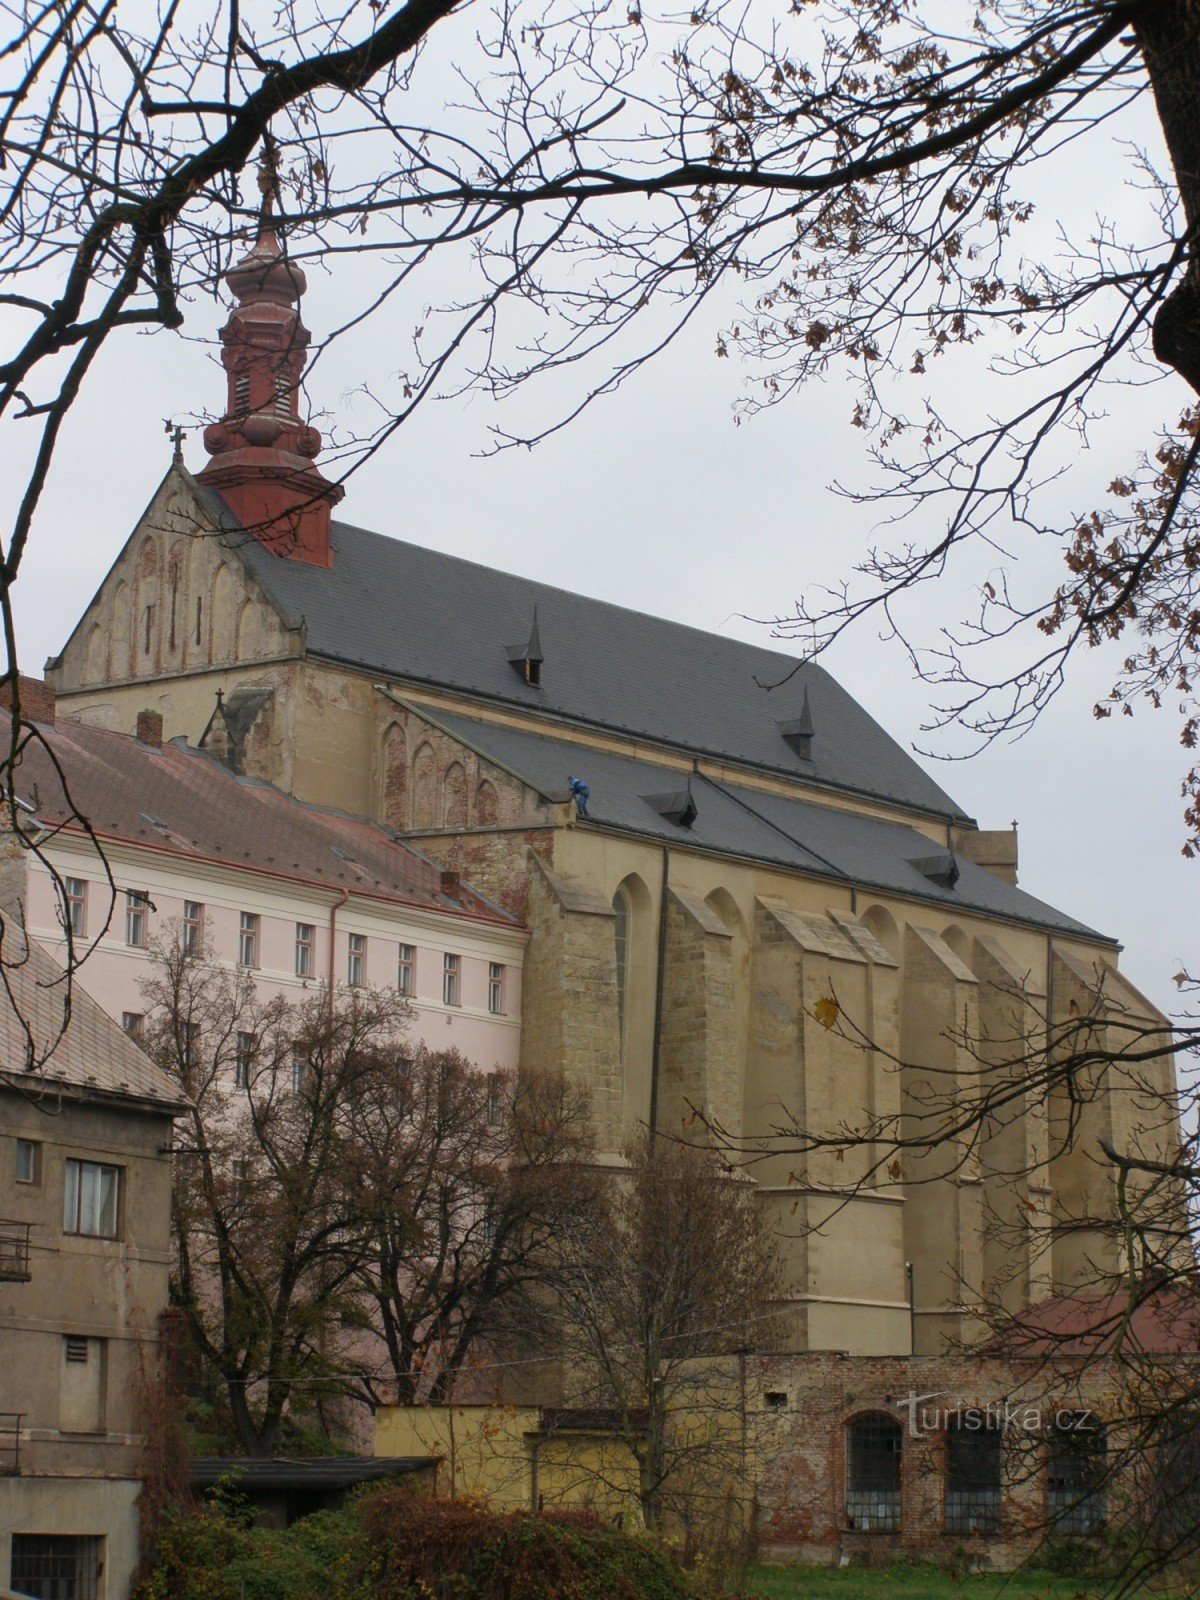 Jaroměř - nhà thờ St. Nicholas